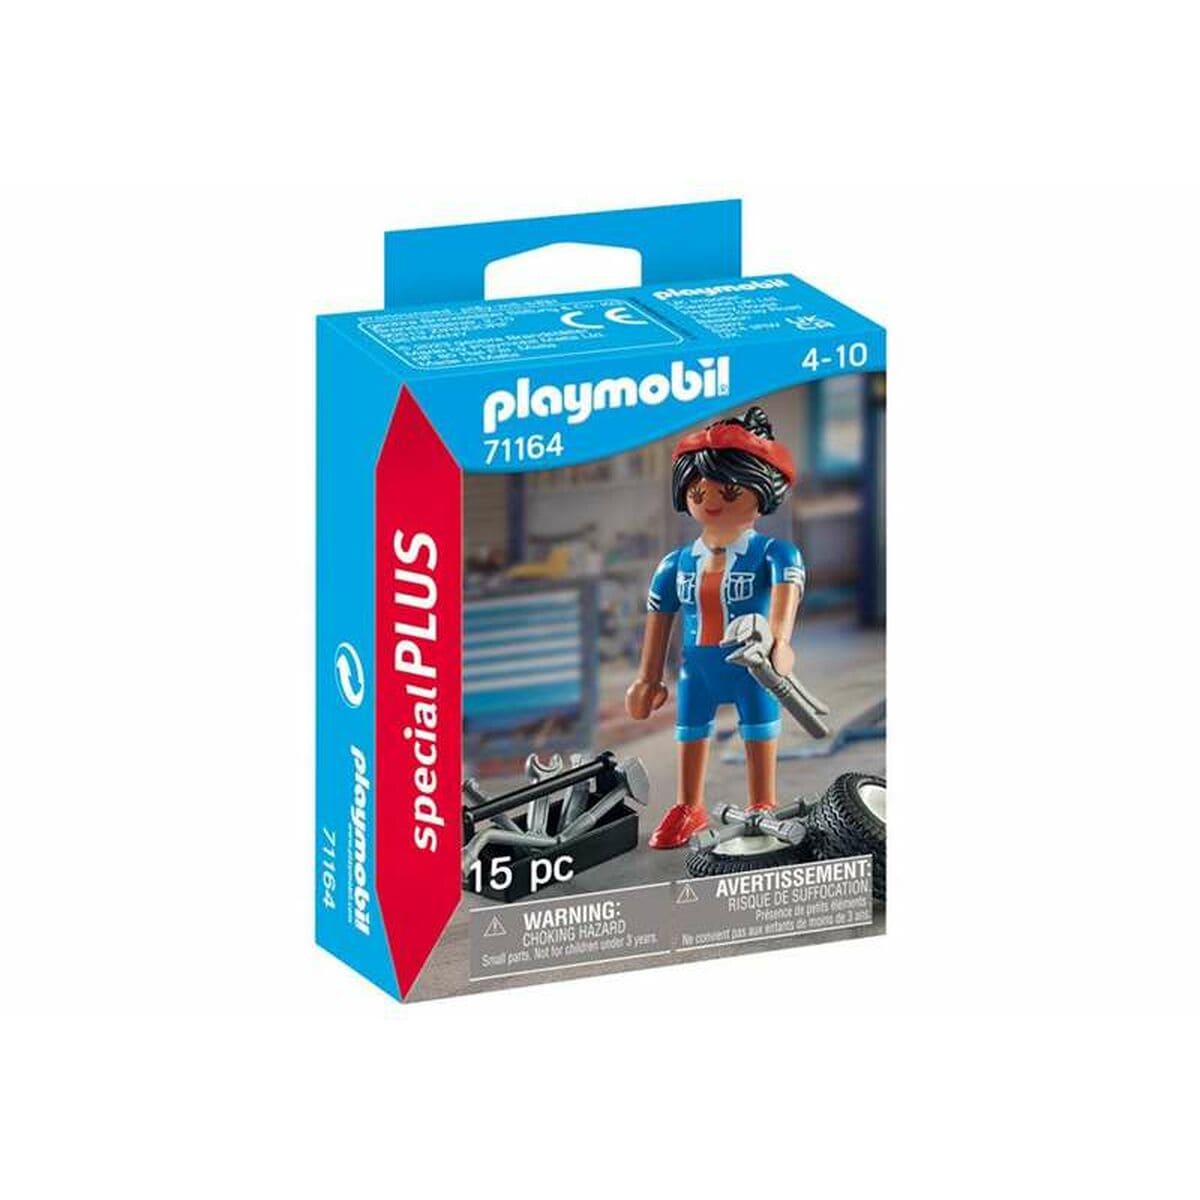 Playmobil Spielzeug | Kostüme > Spielzeug und Spiele > Weiteres spielzeug Playset Playmobil 71164 Special PLUS Engineer 15 Stücke